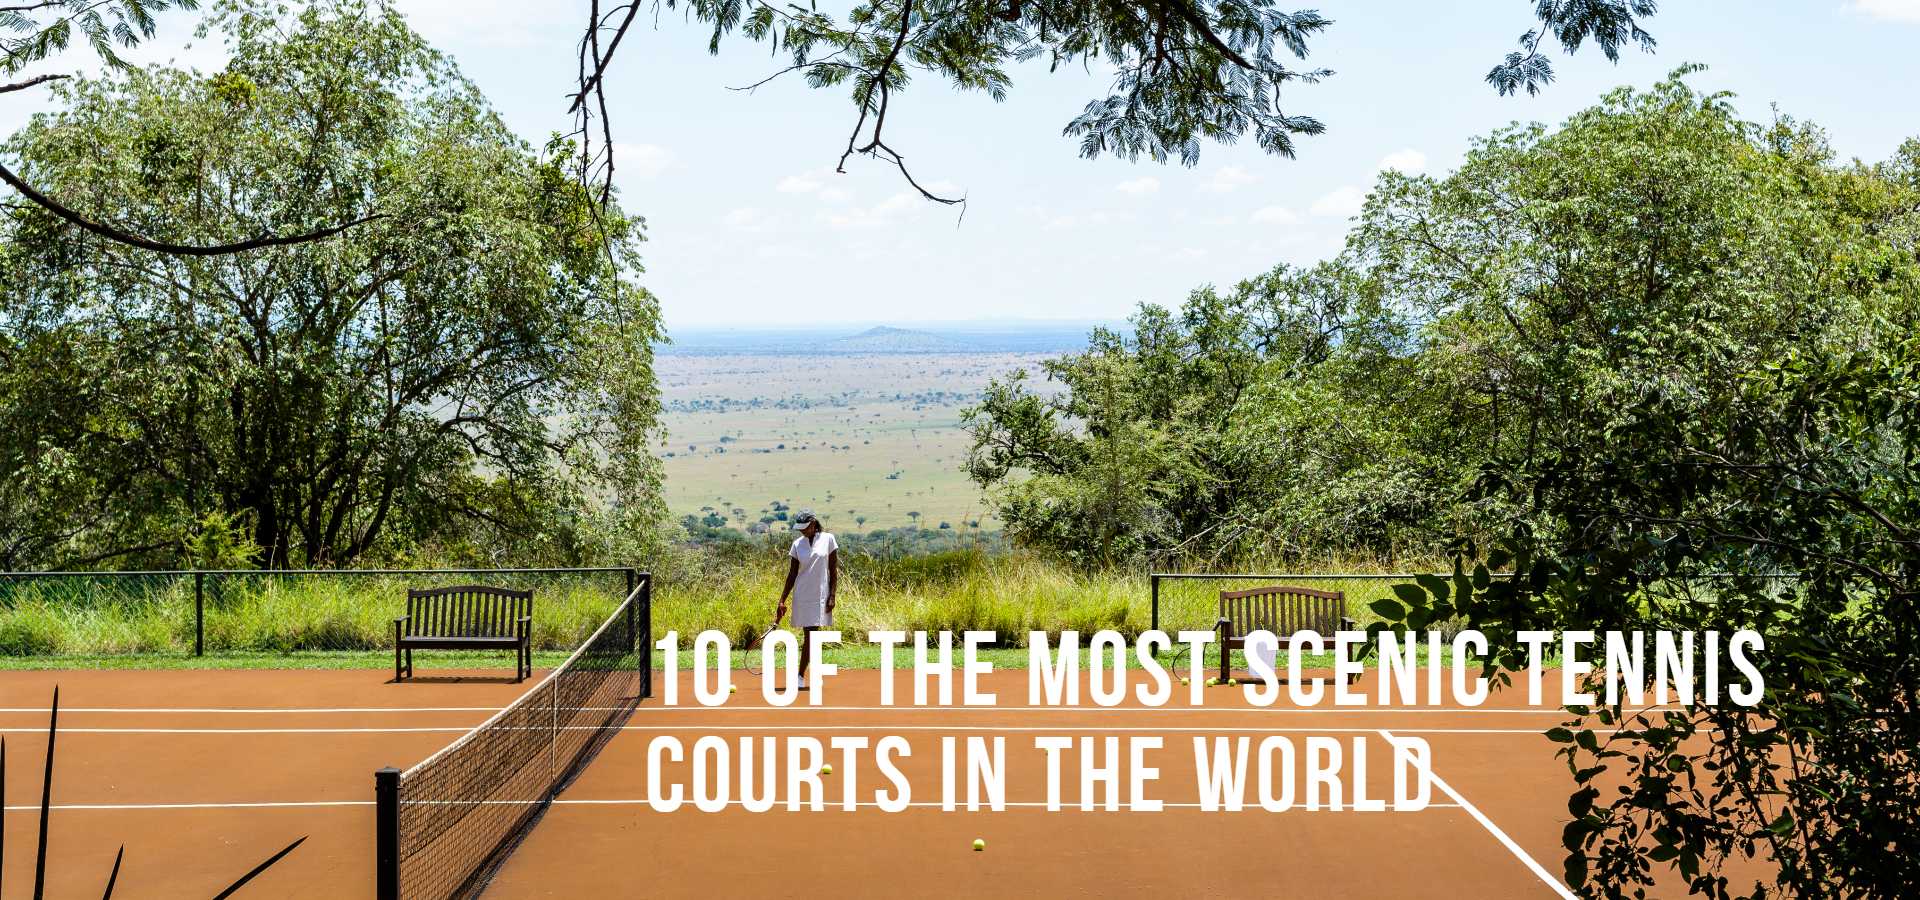 Tennis court at Singita Sasakwa Lodge in the Serengeti National Park, Tanzania